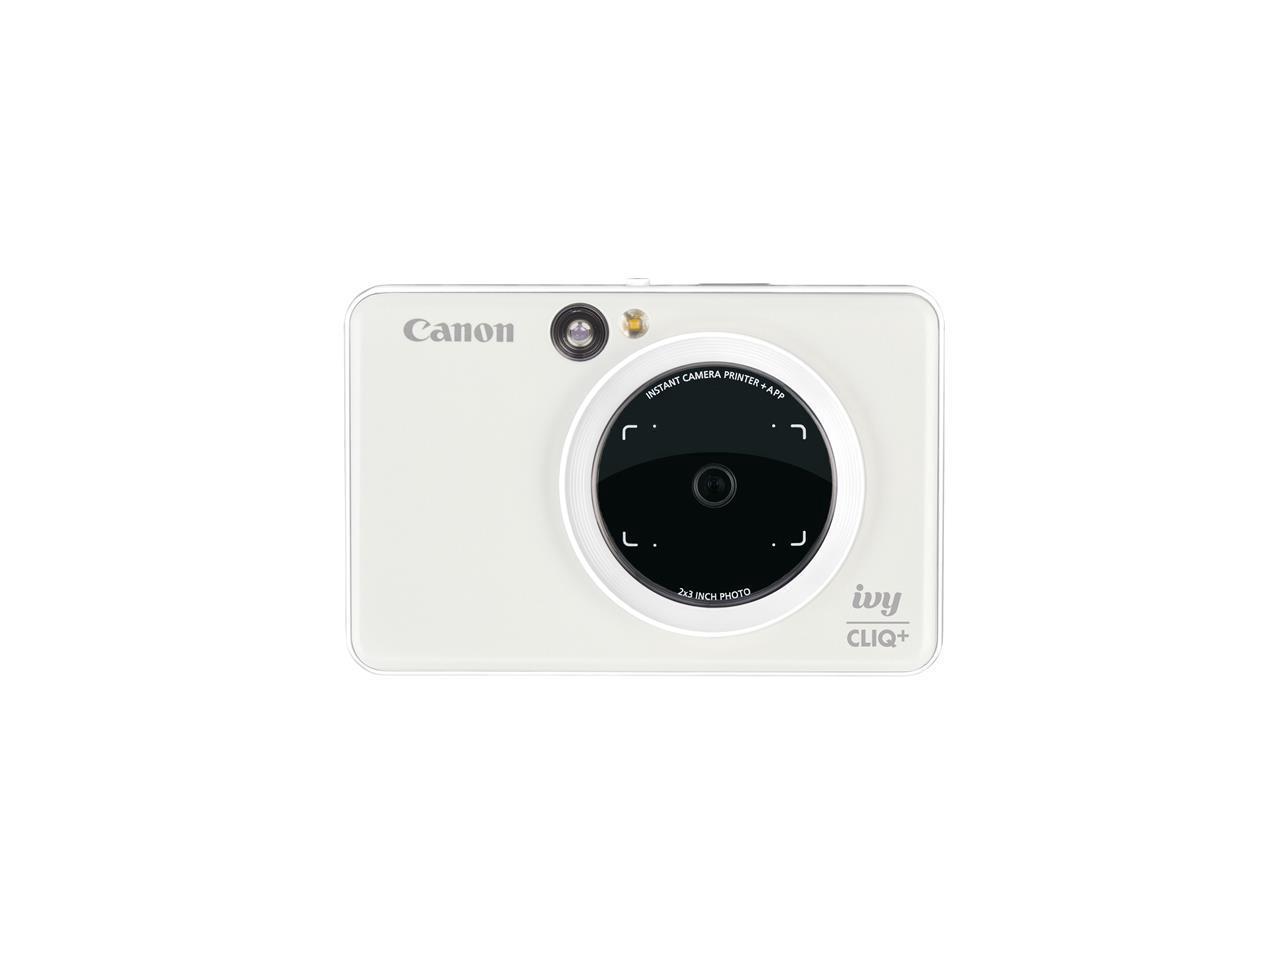 Canon IVY CLIQ+ Instant Digital Camera Printer + App via Bluetooth (Pearl White)